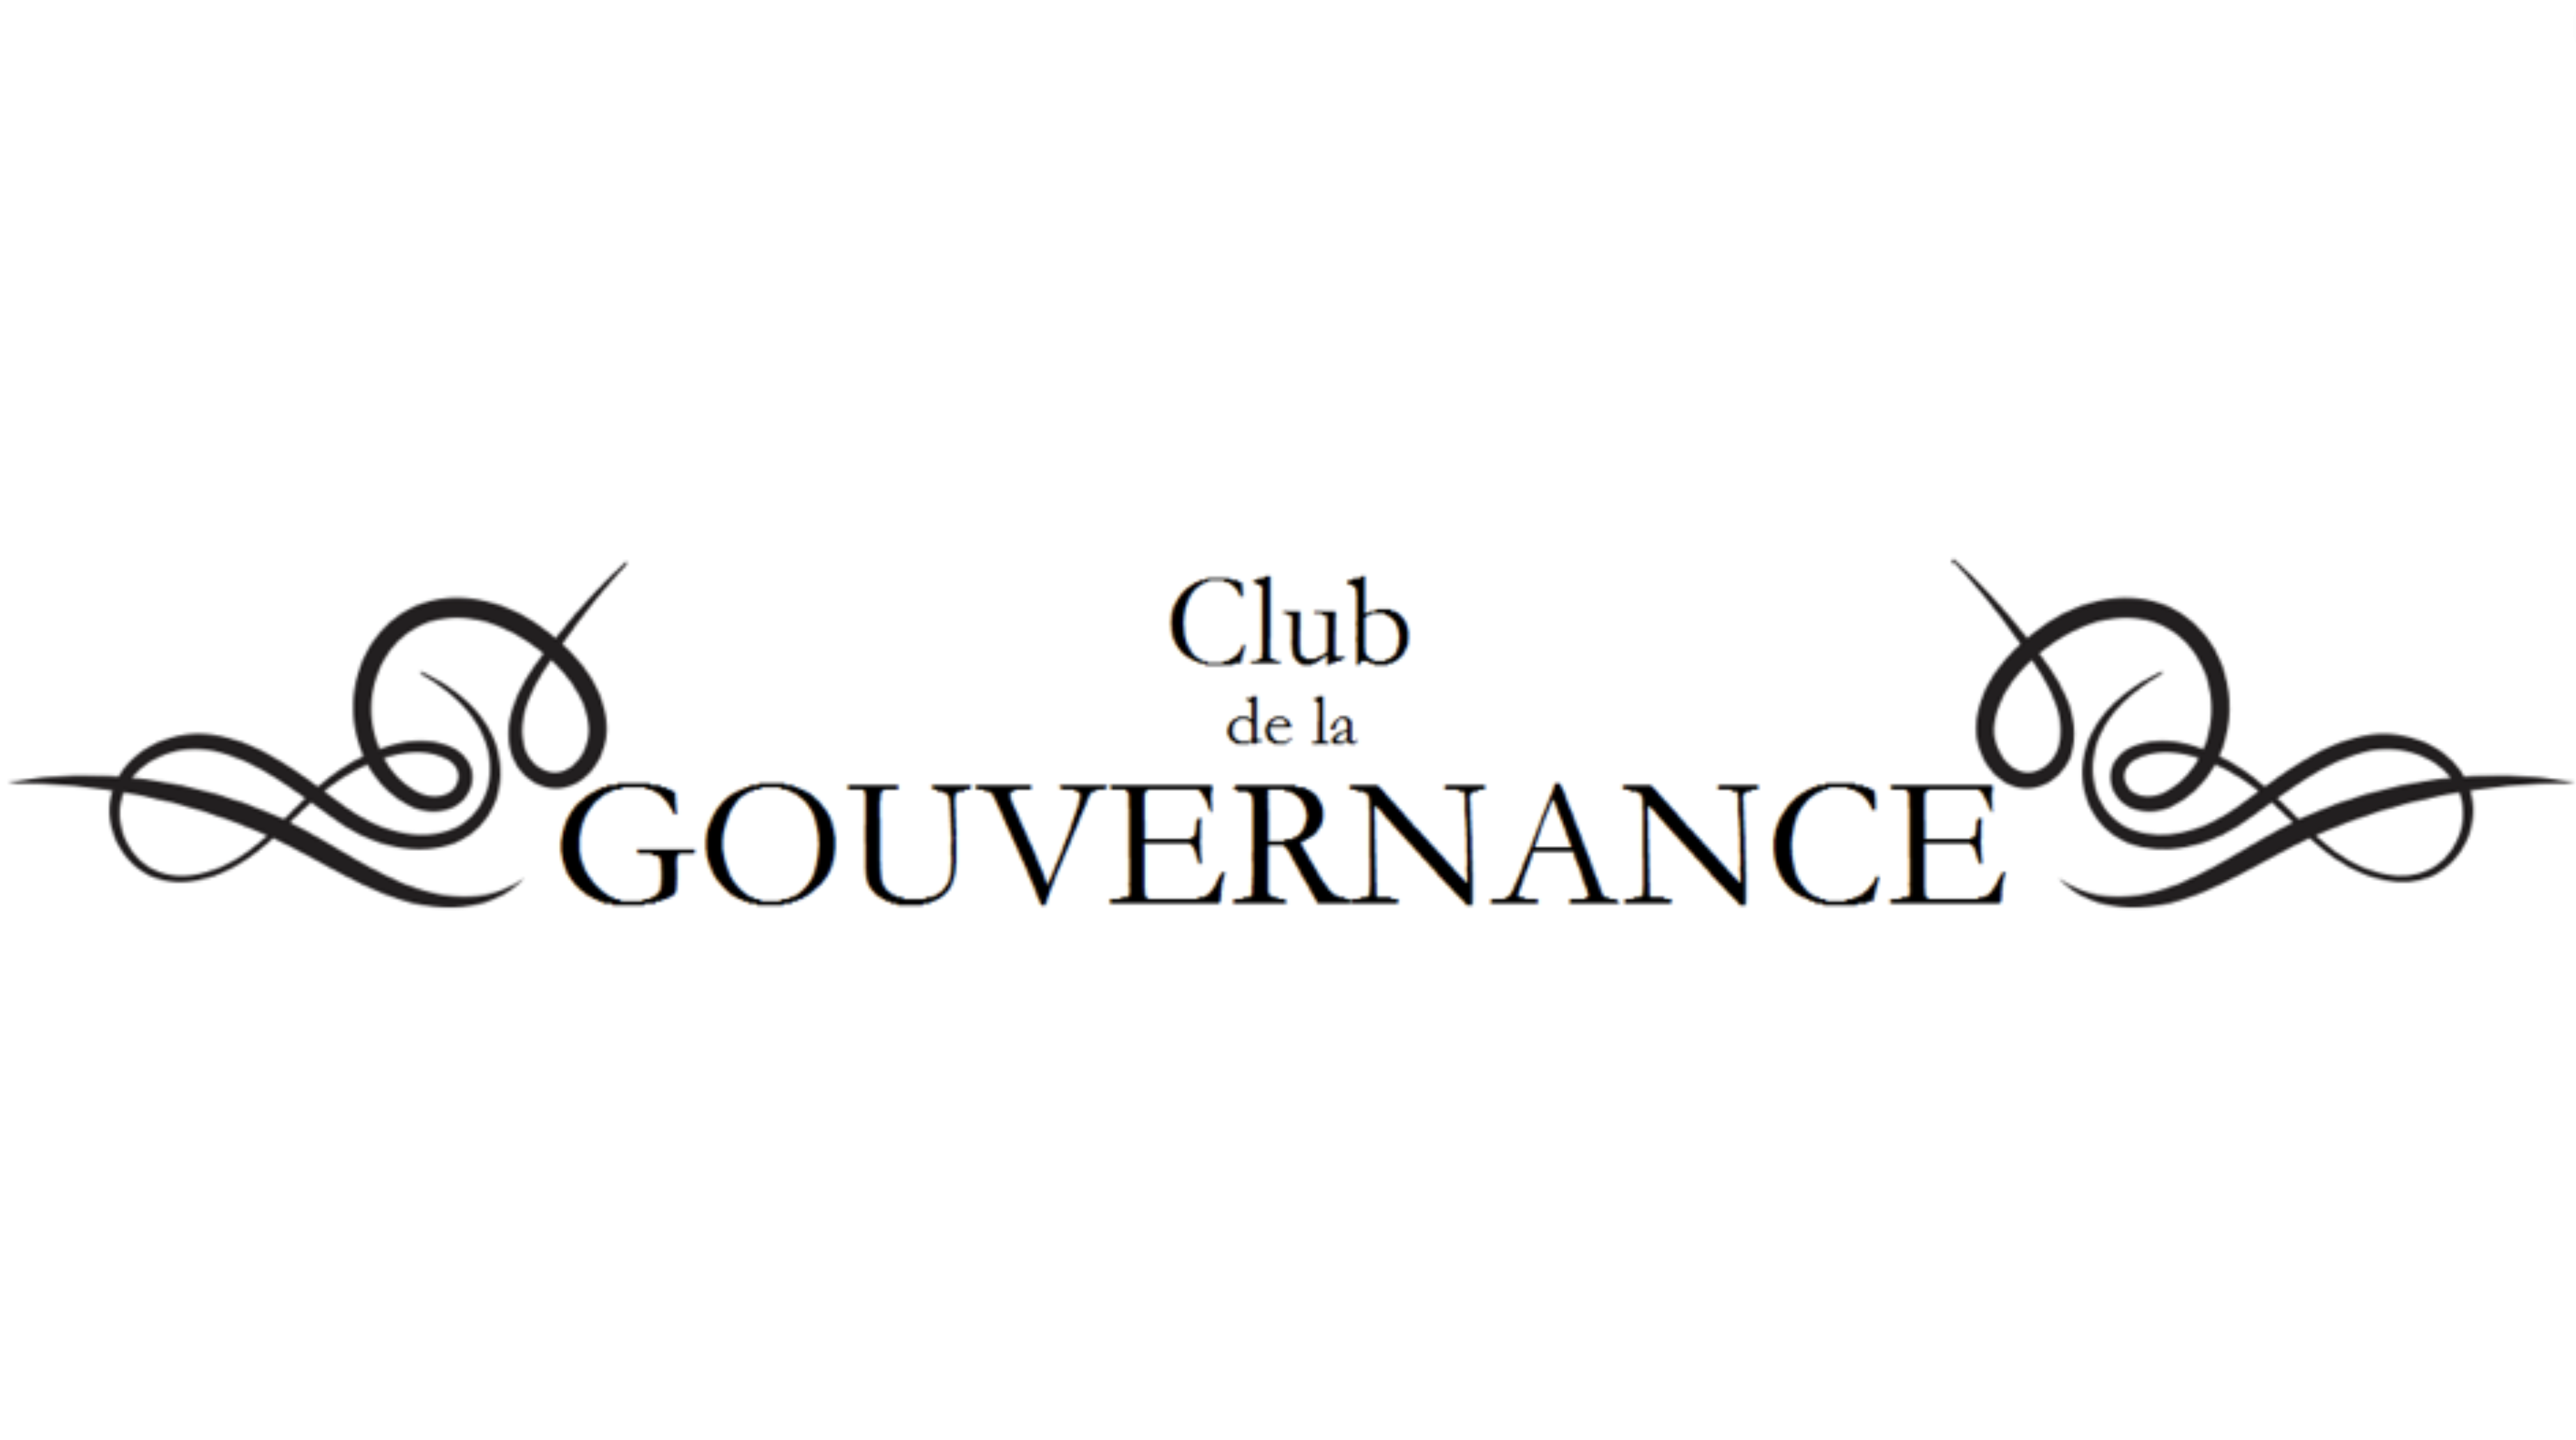 Club de la gouvernance